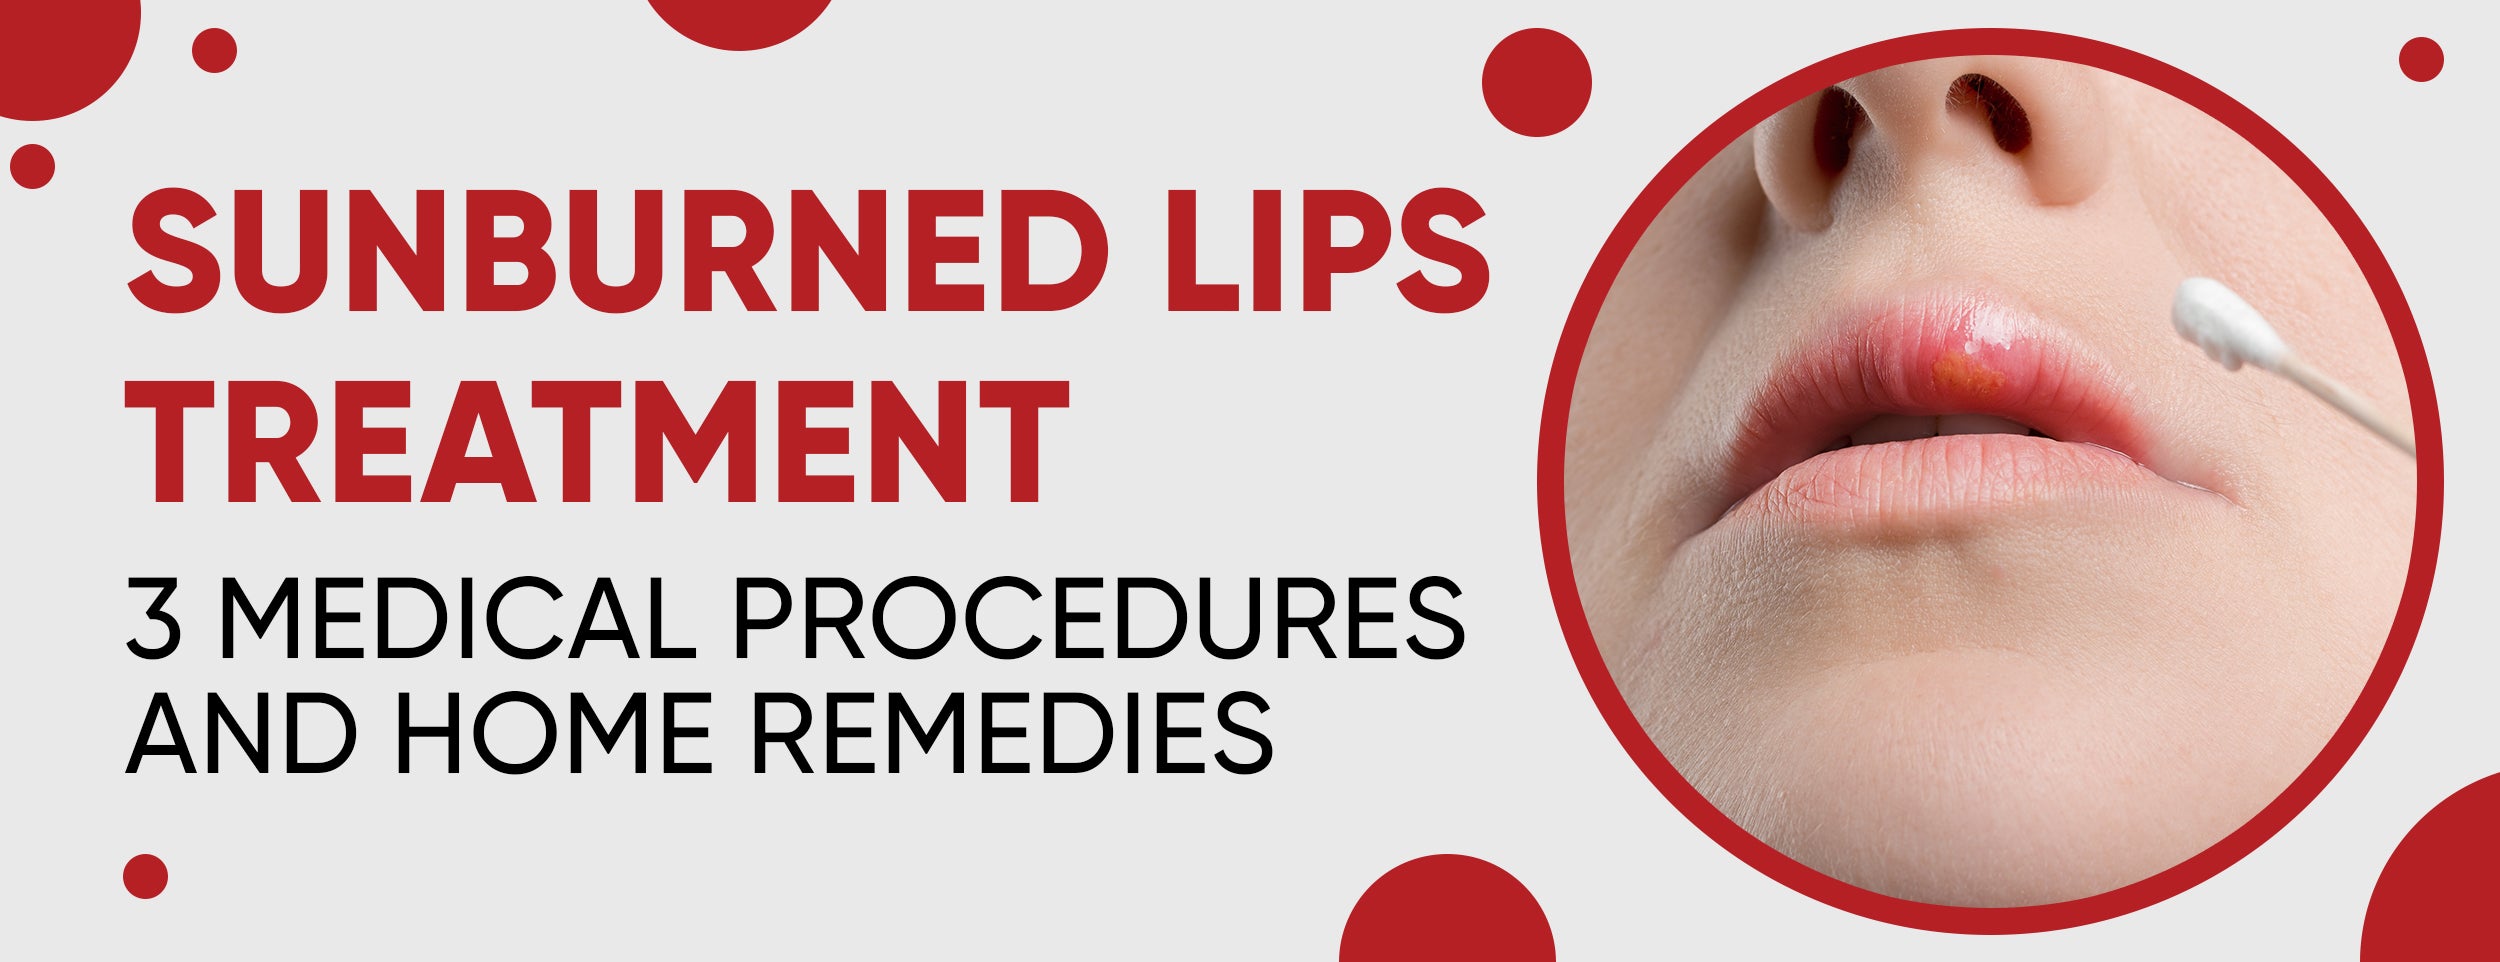 Home remedies & medical treatments for sunburned lips